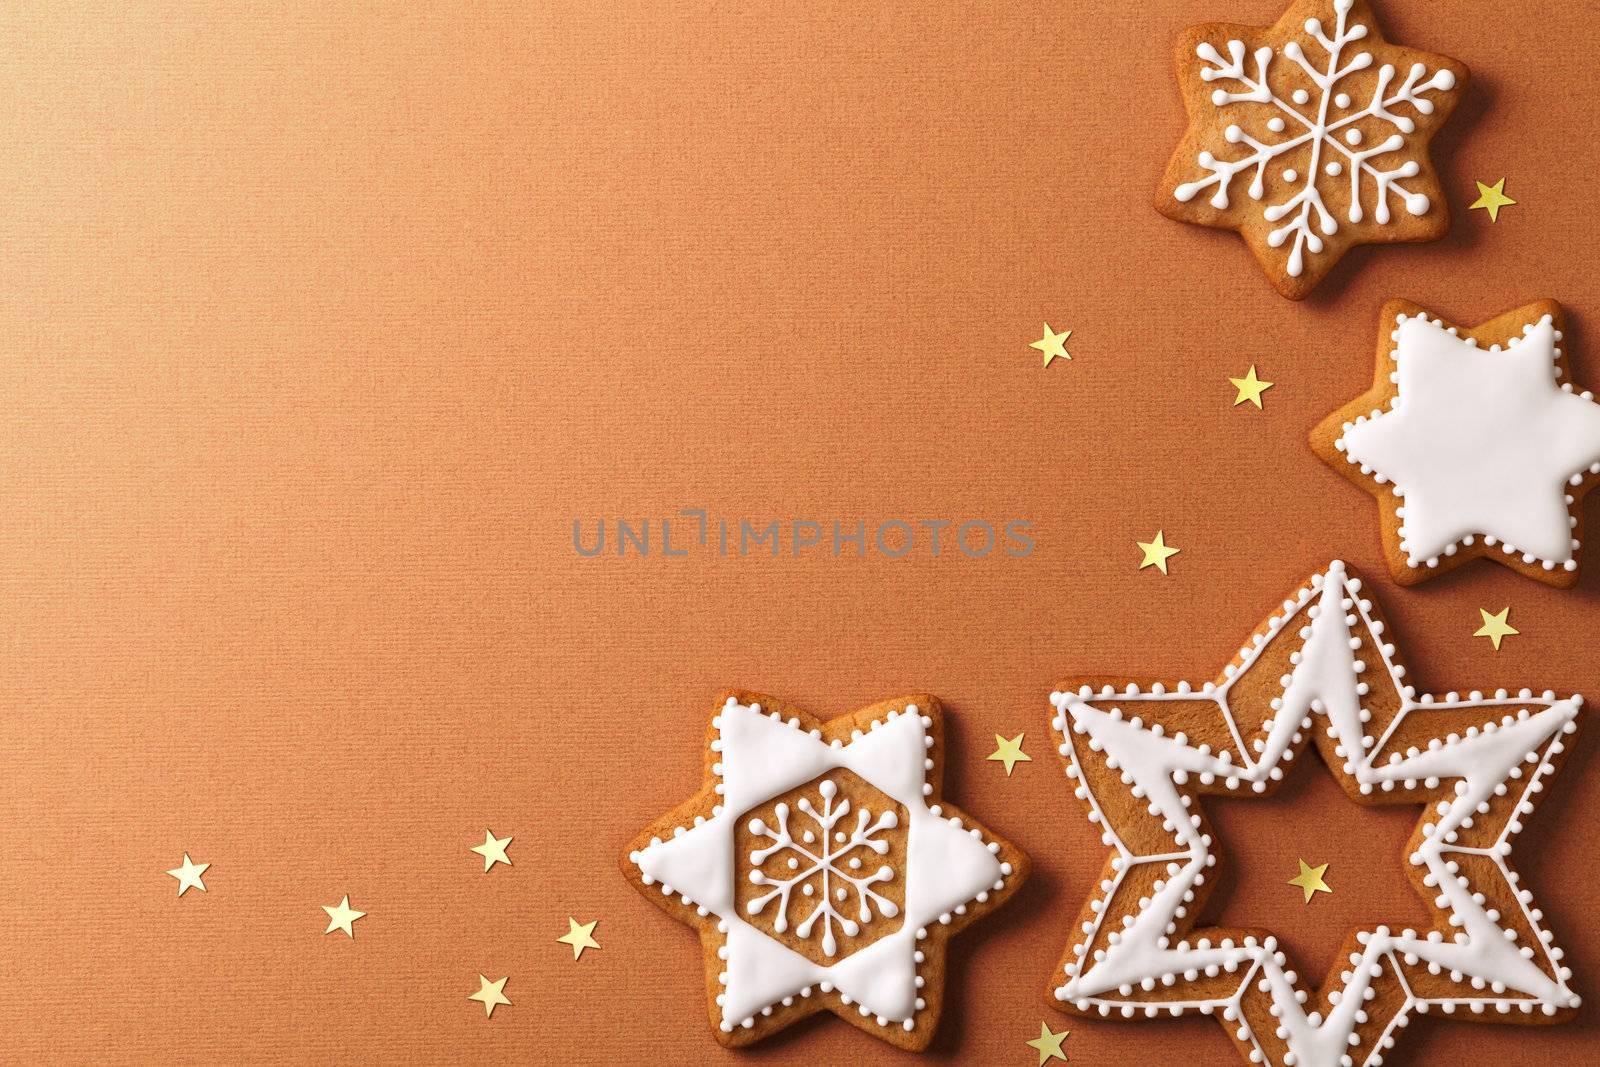 Gingerbread stars by bozena_fulawka